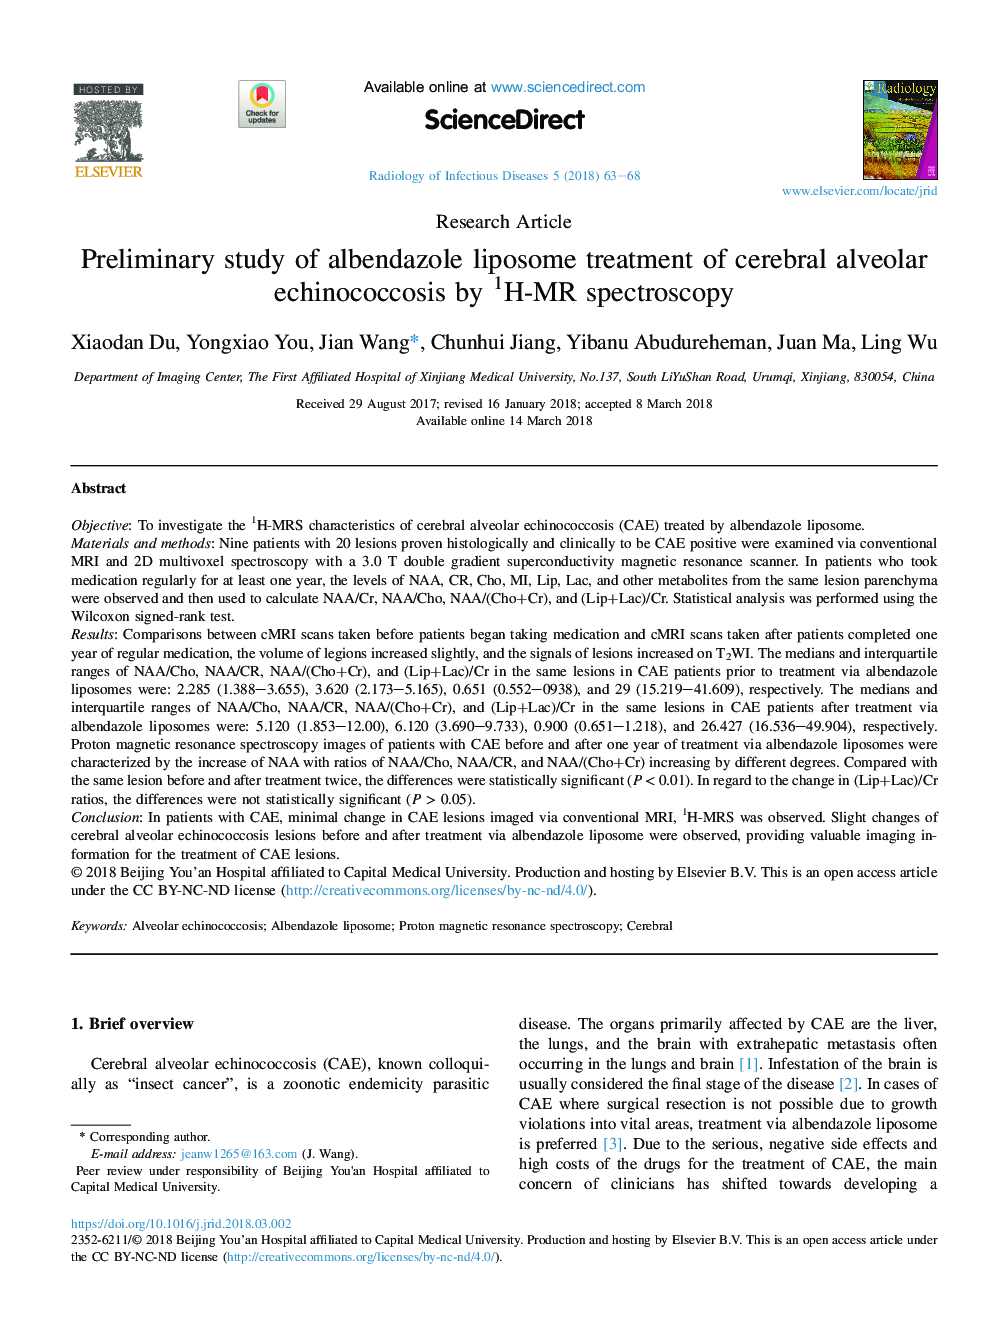 Preliminary study of albendazole liposome treatment of cerebral alveolar echinococcosis by 1H-MR spectroscopy